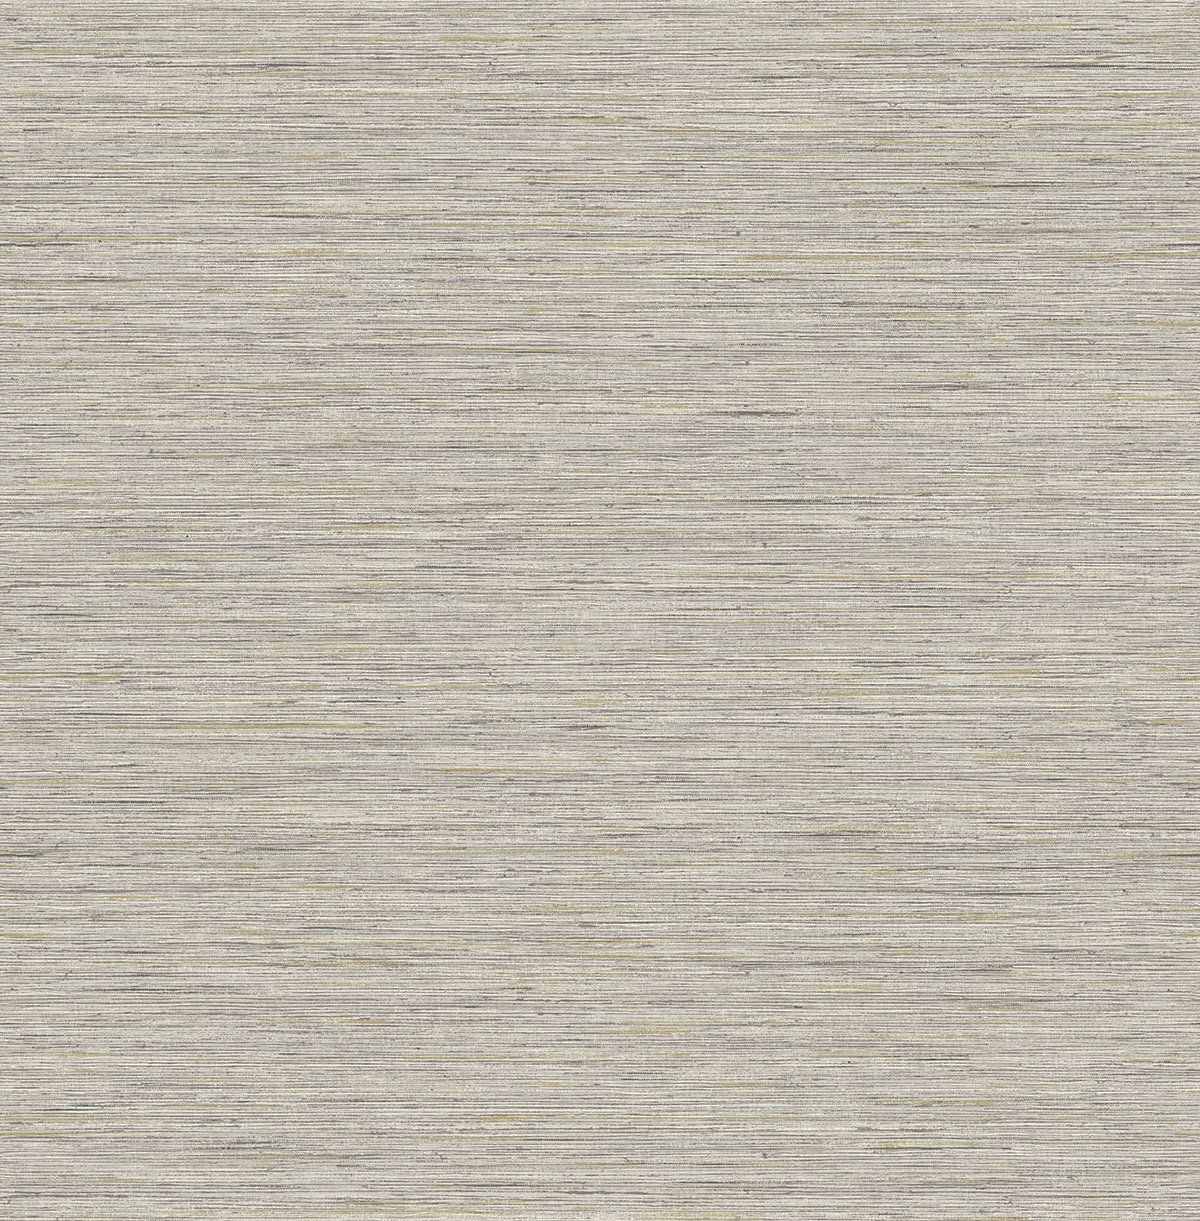 Silk Texture Wallpaper in Warm Silver .burkedecor.com